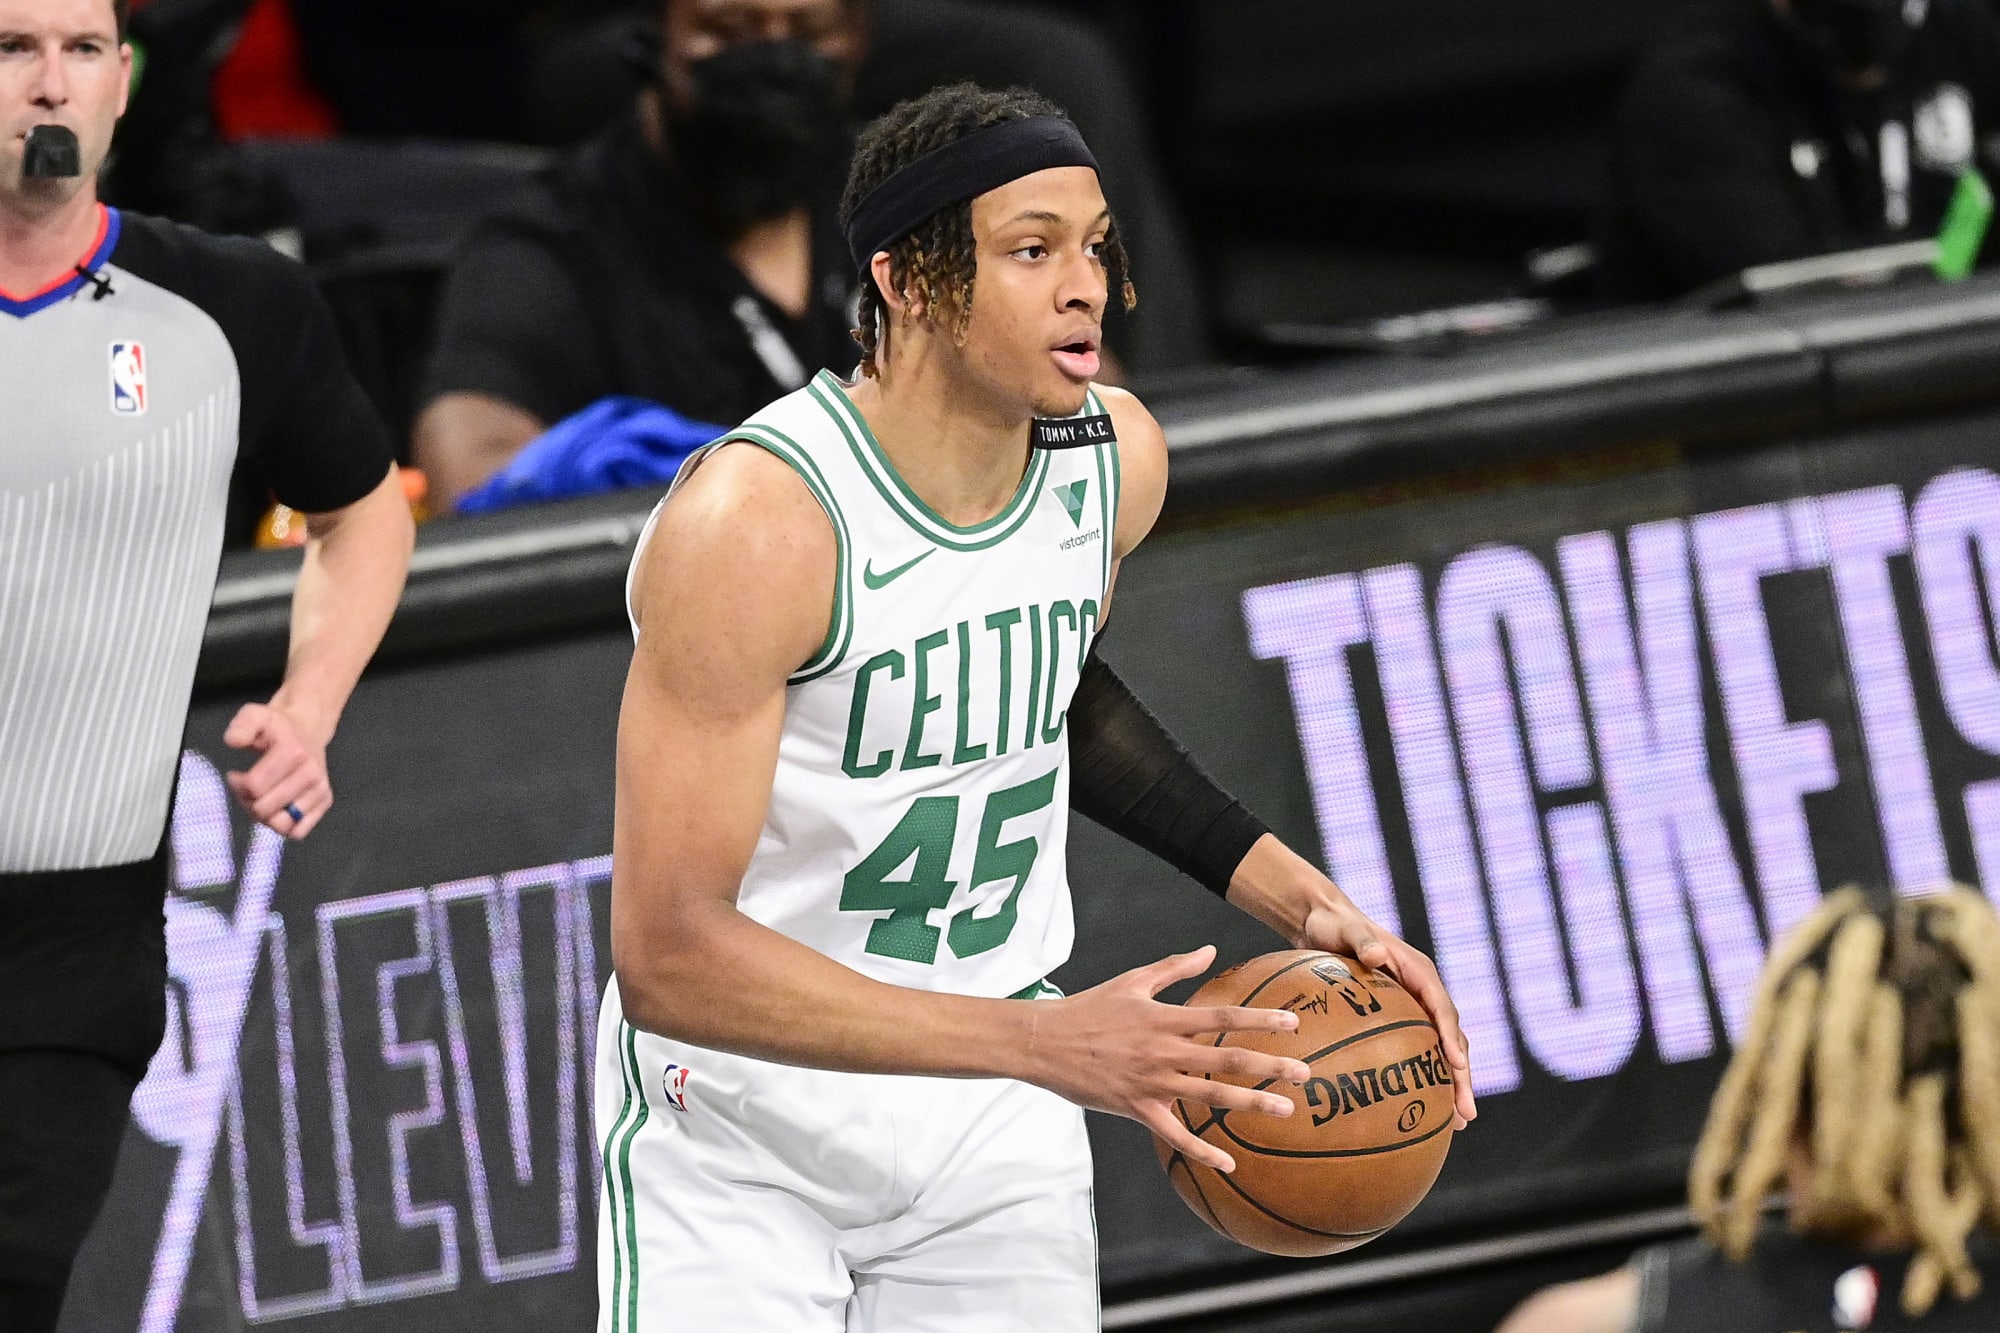 Boston Celtics: Romeo Langford is poised to make impact in third